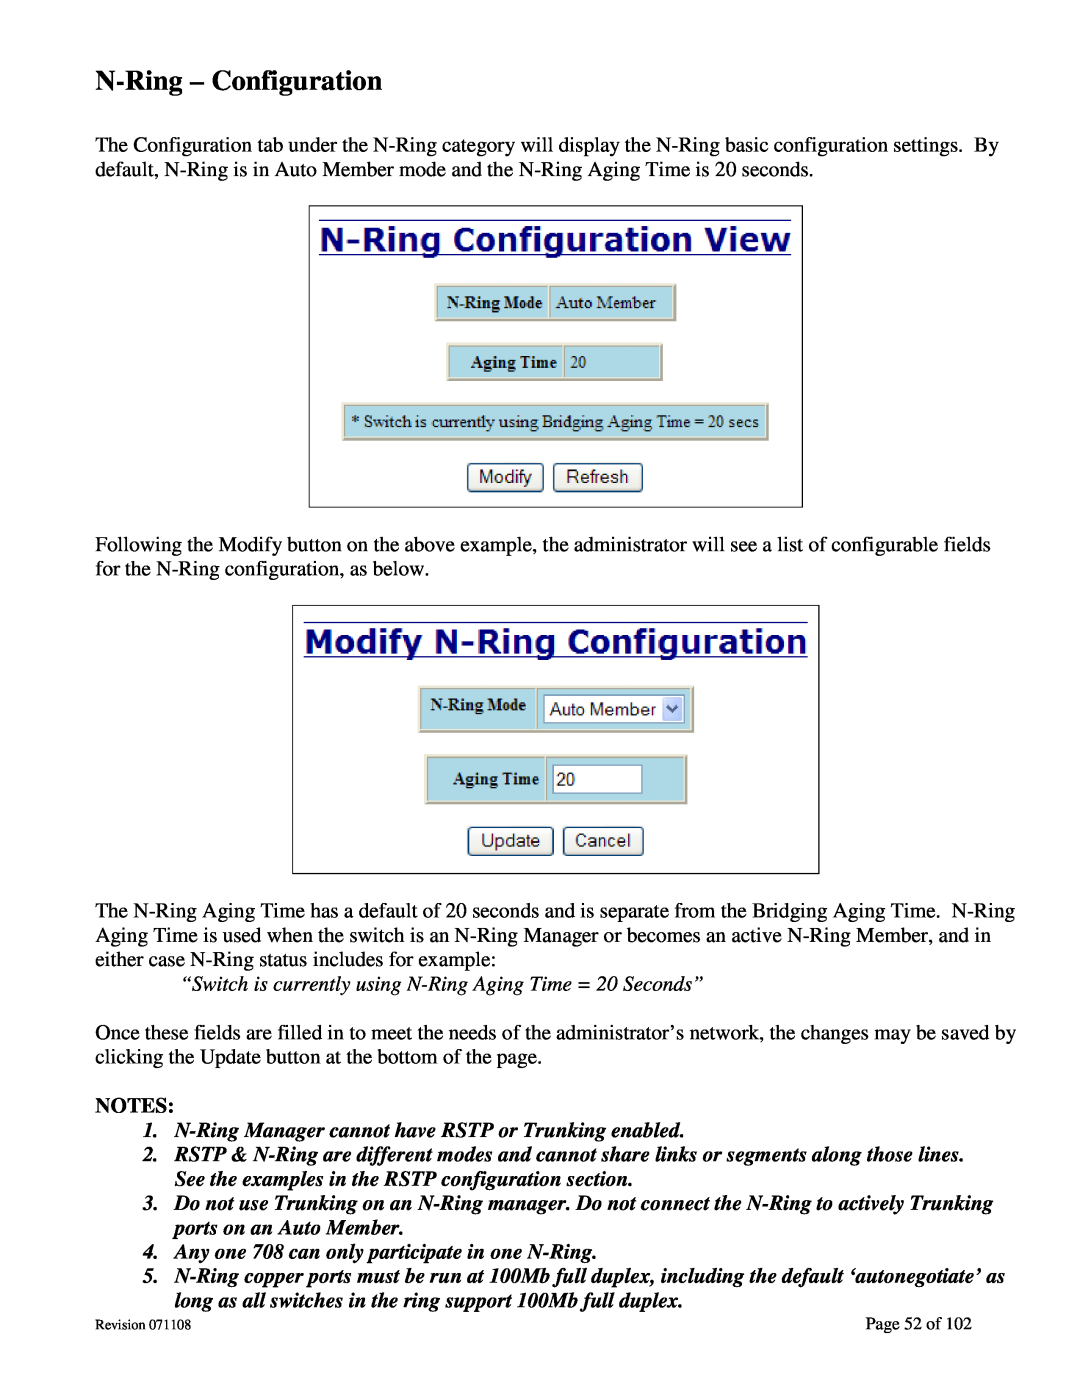 N-Tron 708M12 user manual N-Ring - Configuration 